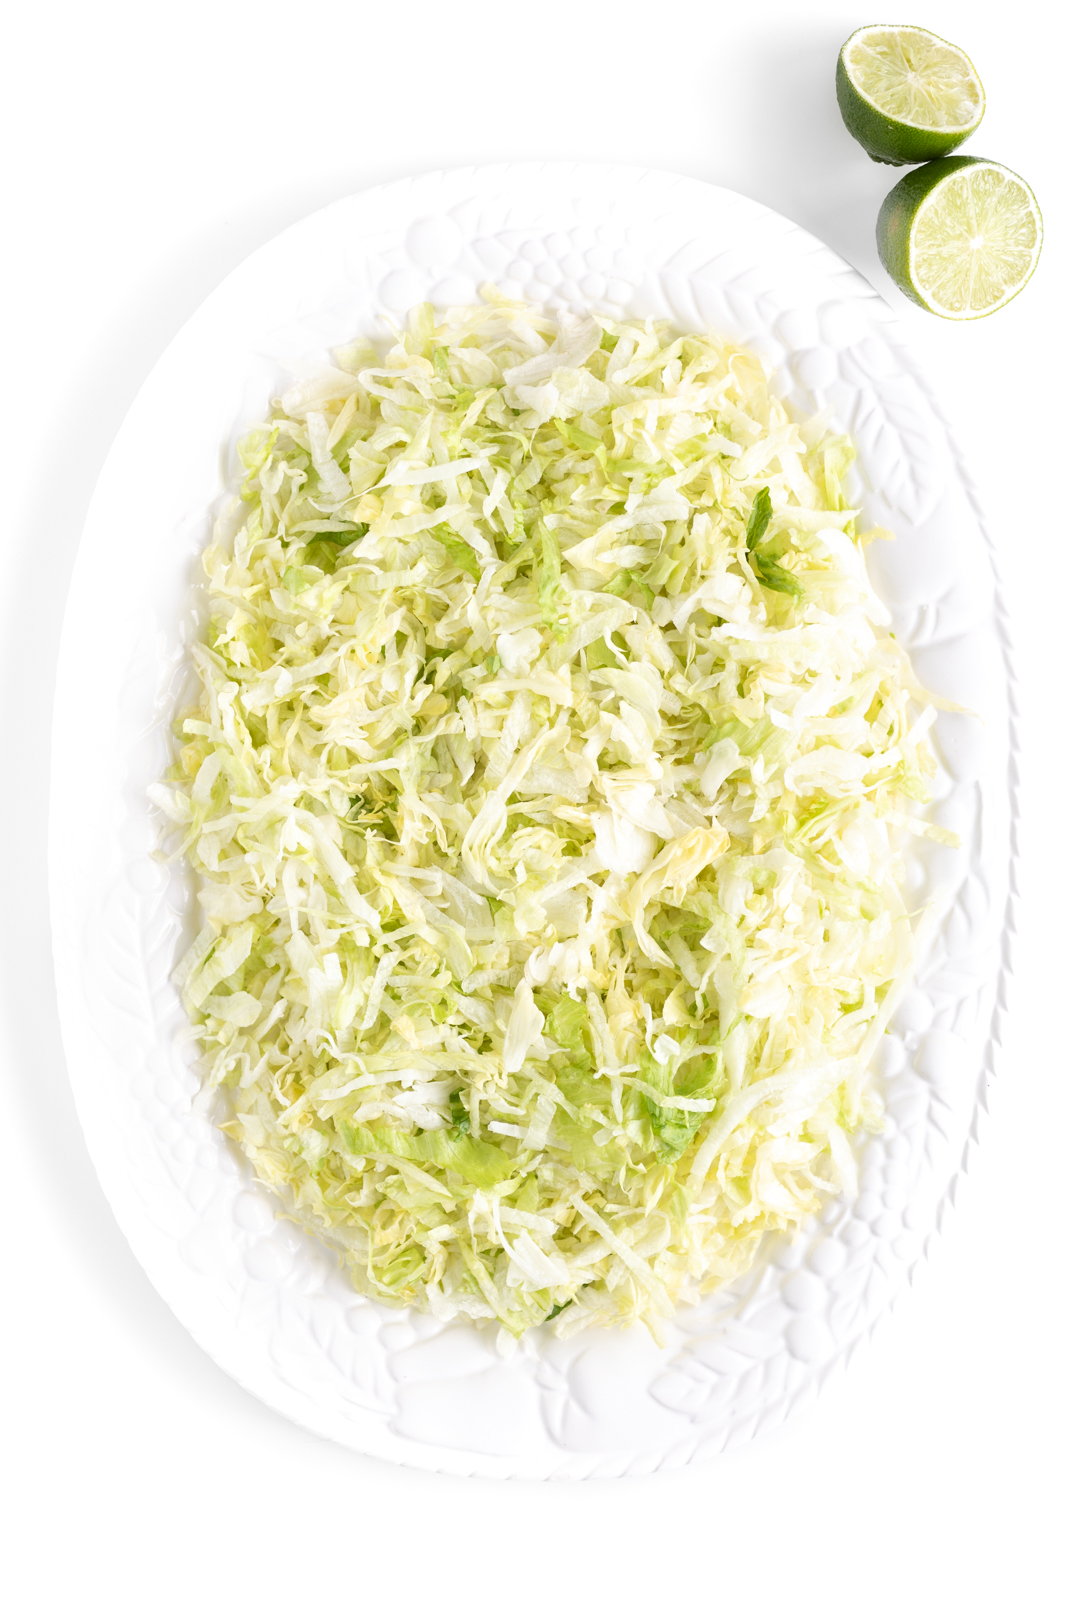 large serving platter with shredded lettuce in preparation of making a full salad.